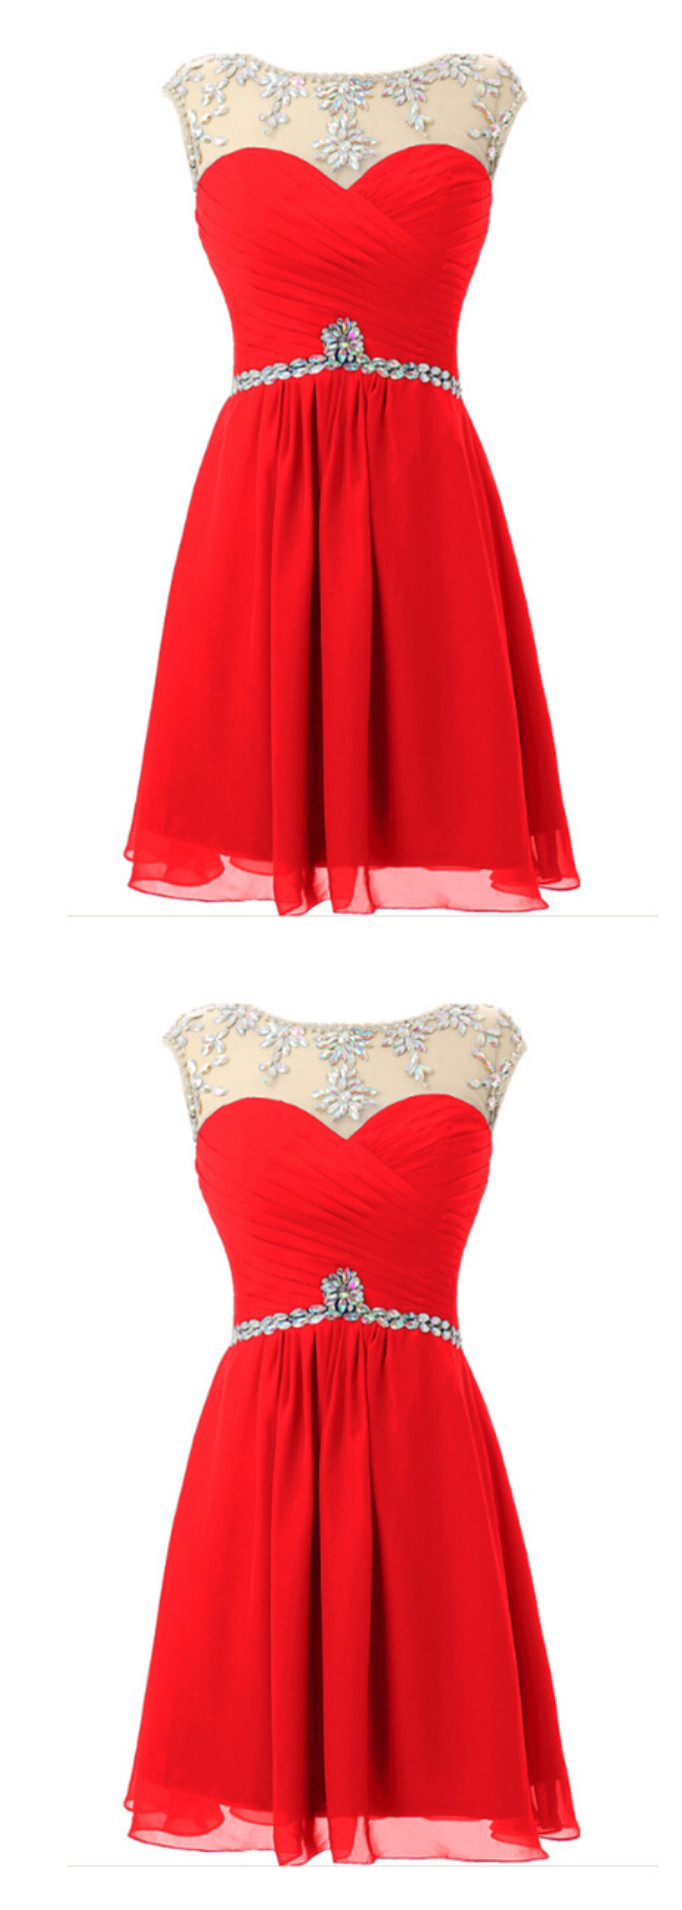 Red Bridesmaid Dress,Chiffon Short Prom Dress,Homecoming Dress